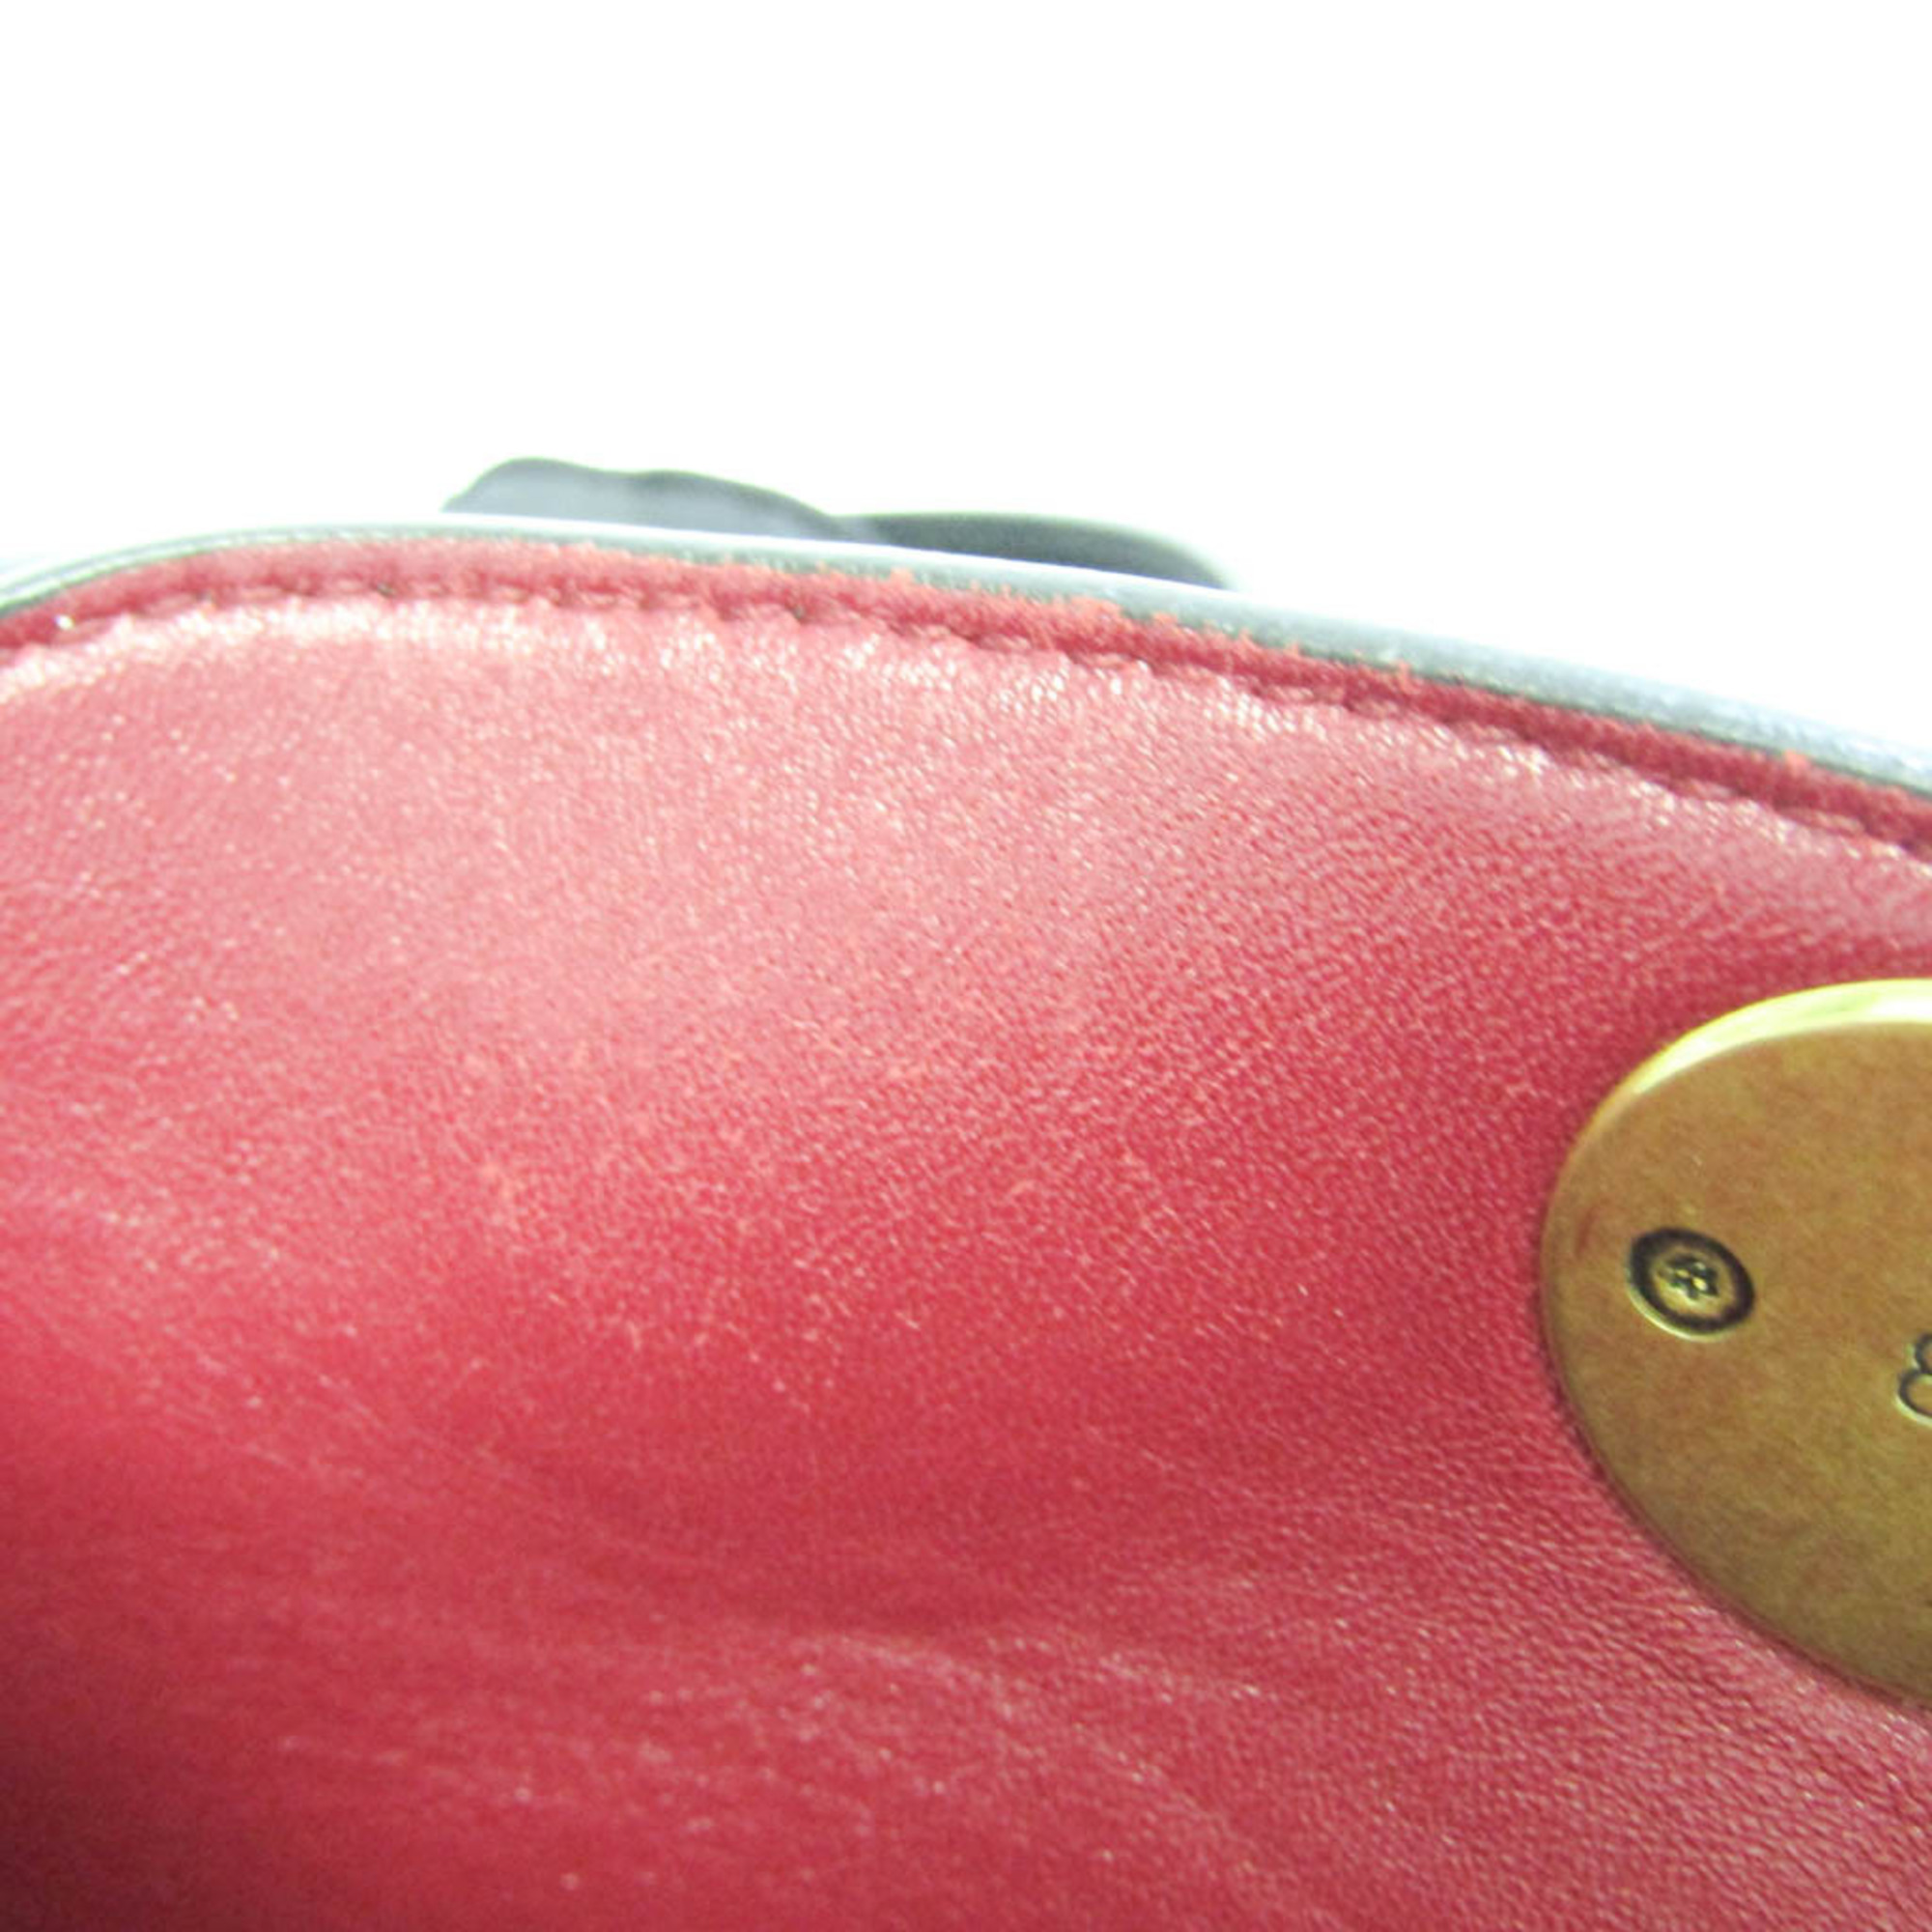 Balenciaga 570093 Women's Leather Handbag,Shoulder Bag Black